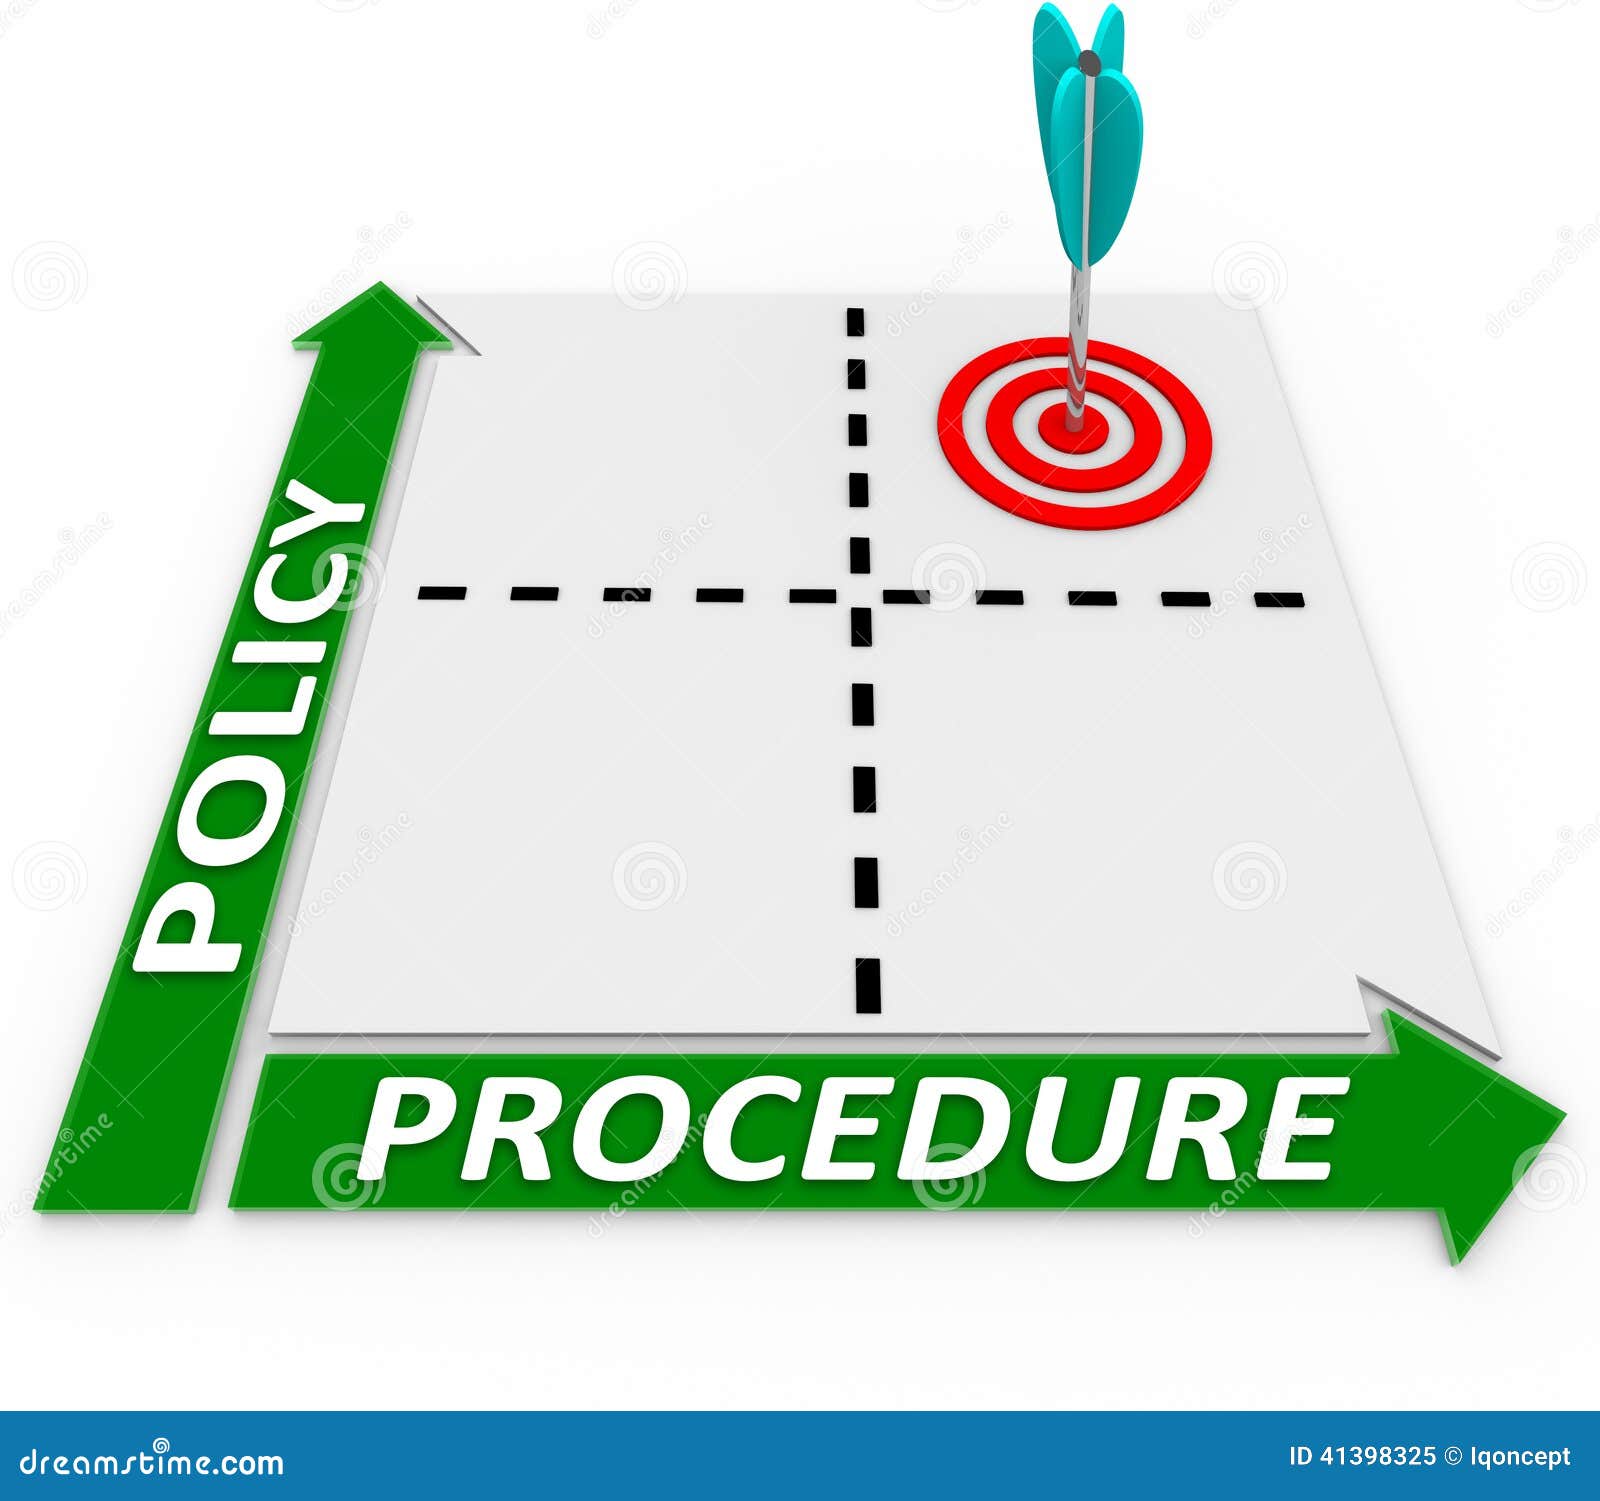 policy procedure intersection matrix company organization practices